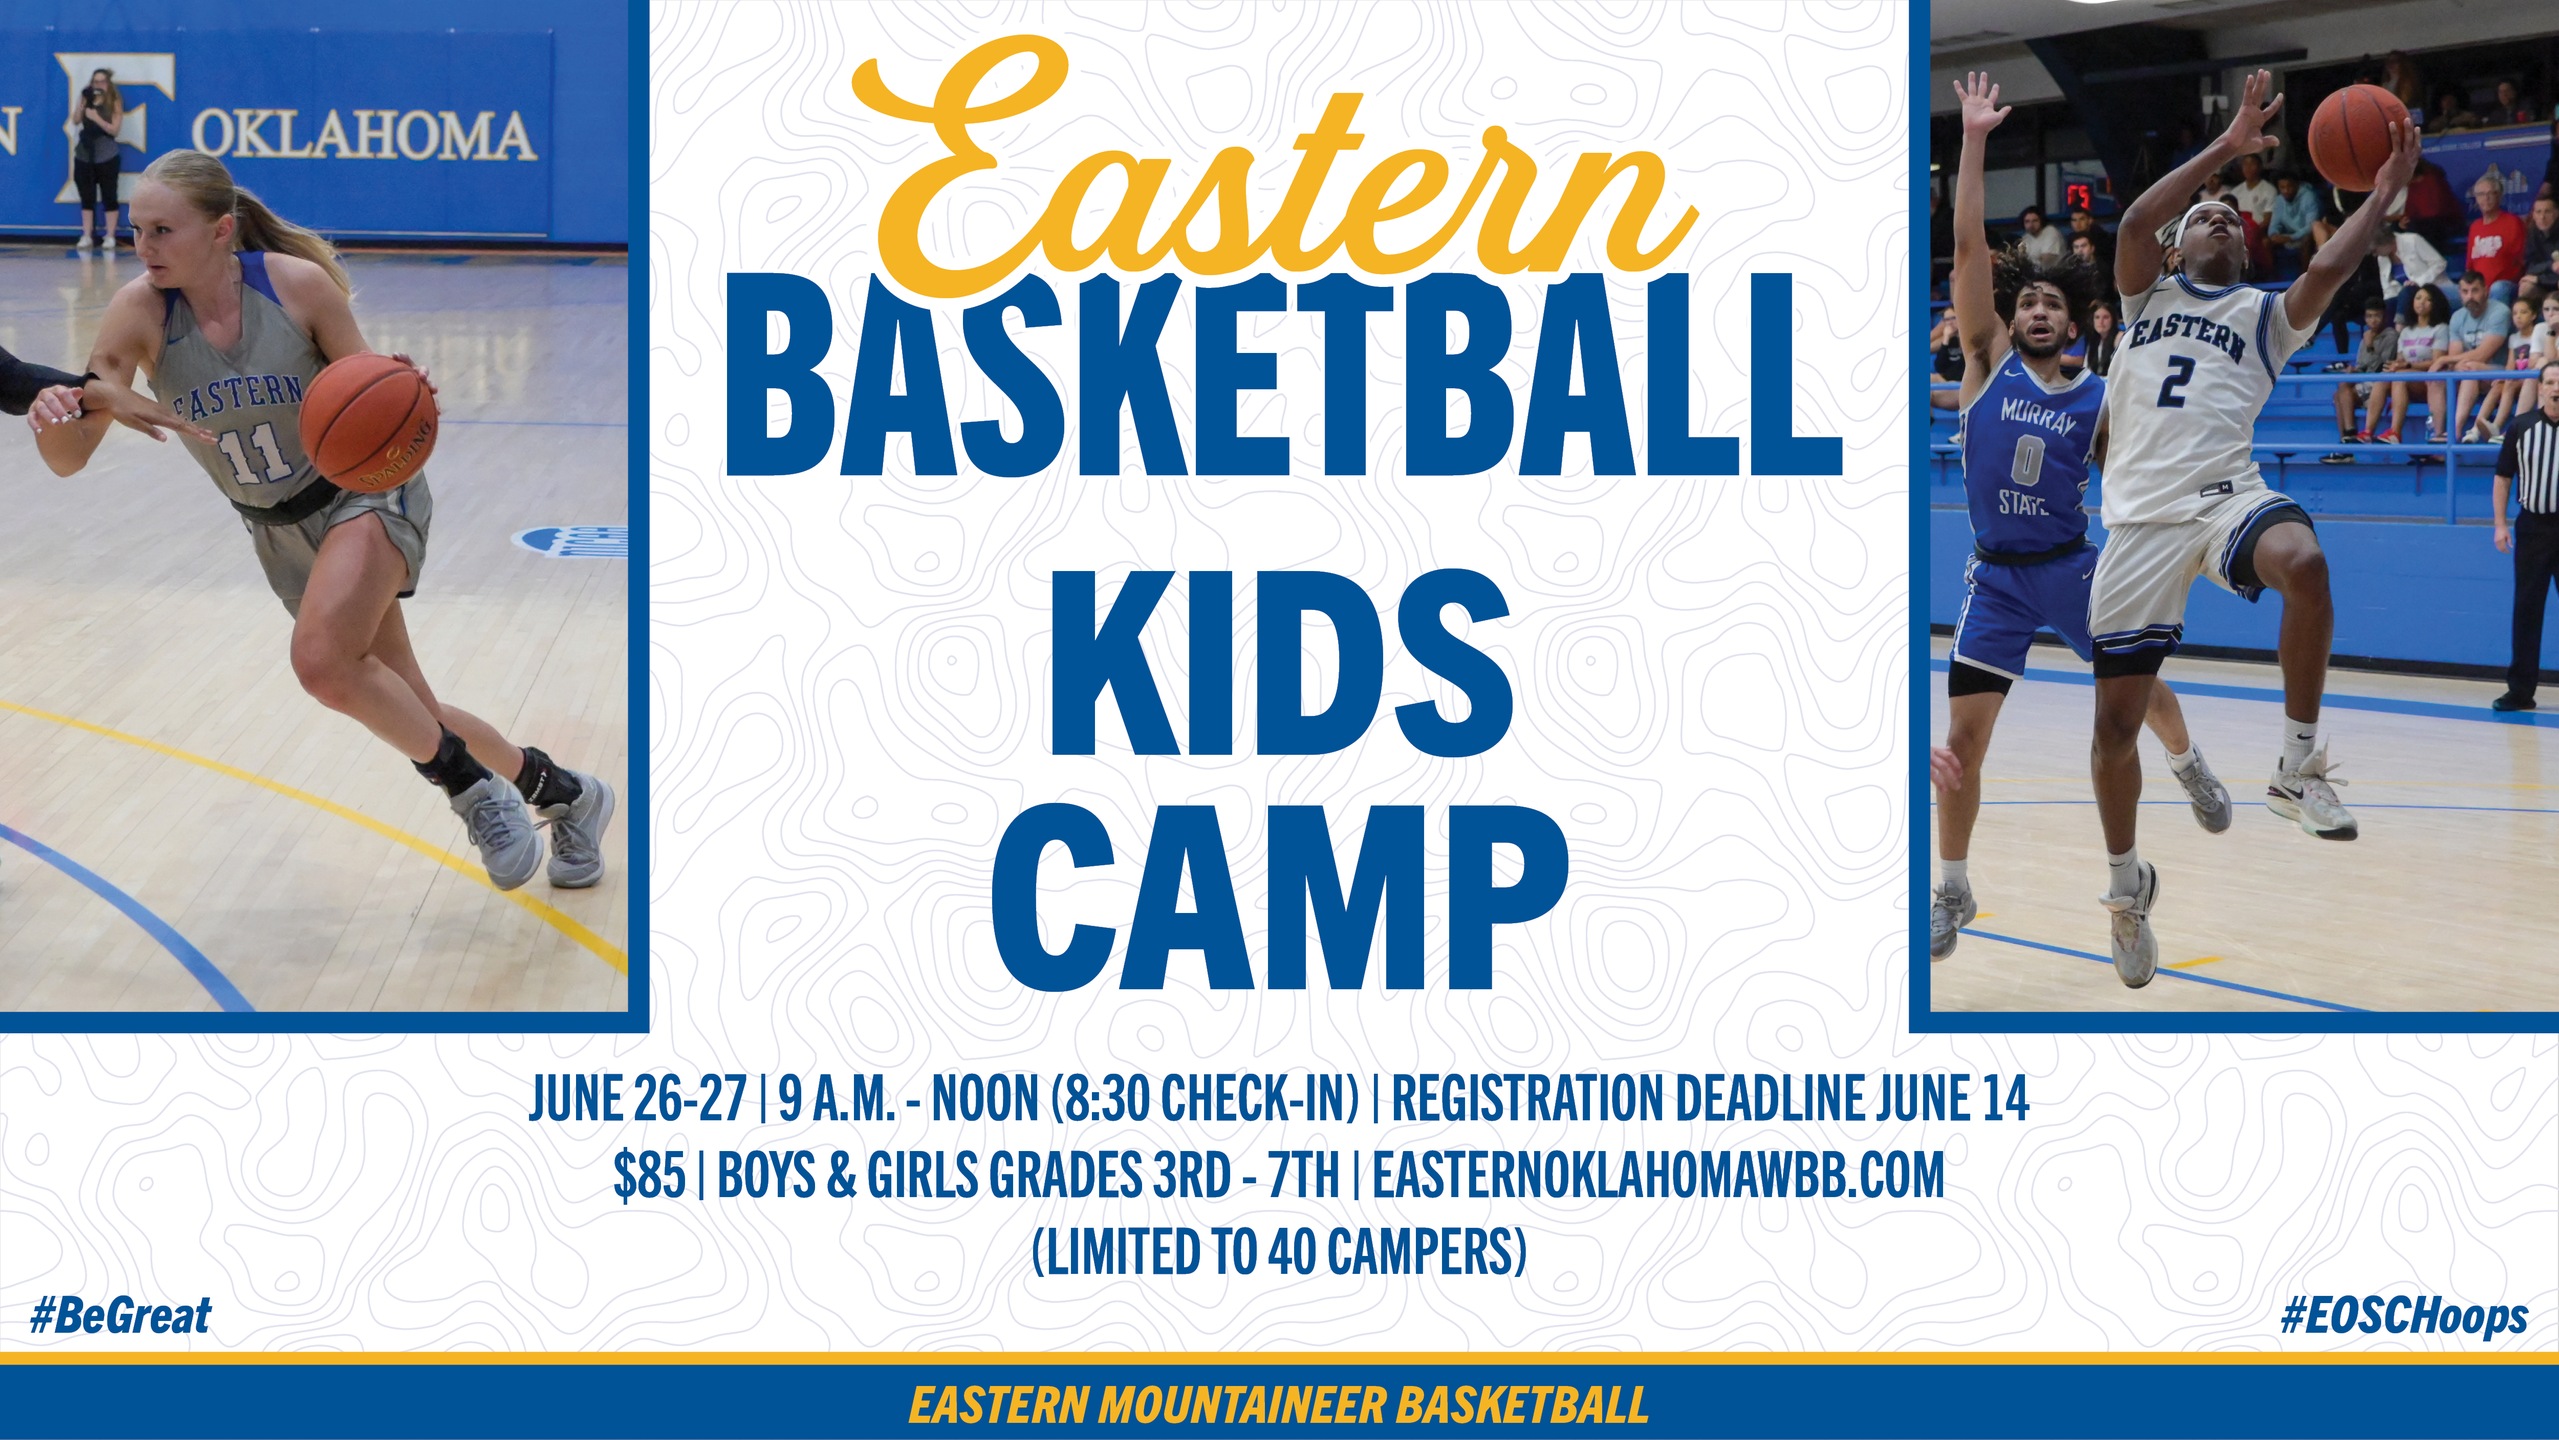 Eastern to Host Basketball Kids Camp June 26-27